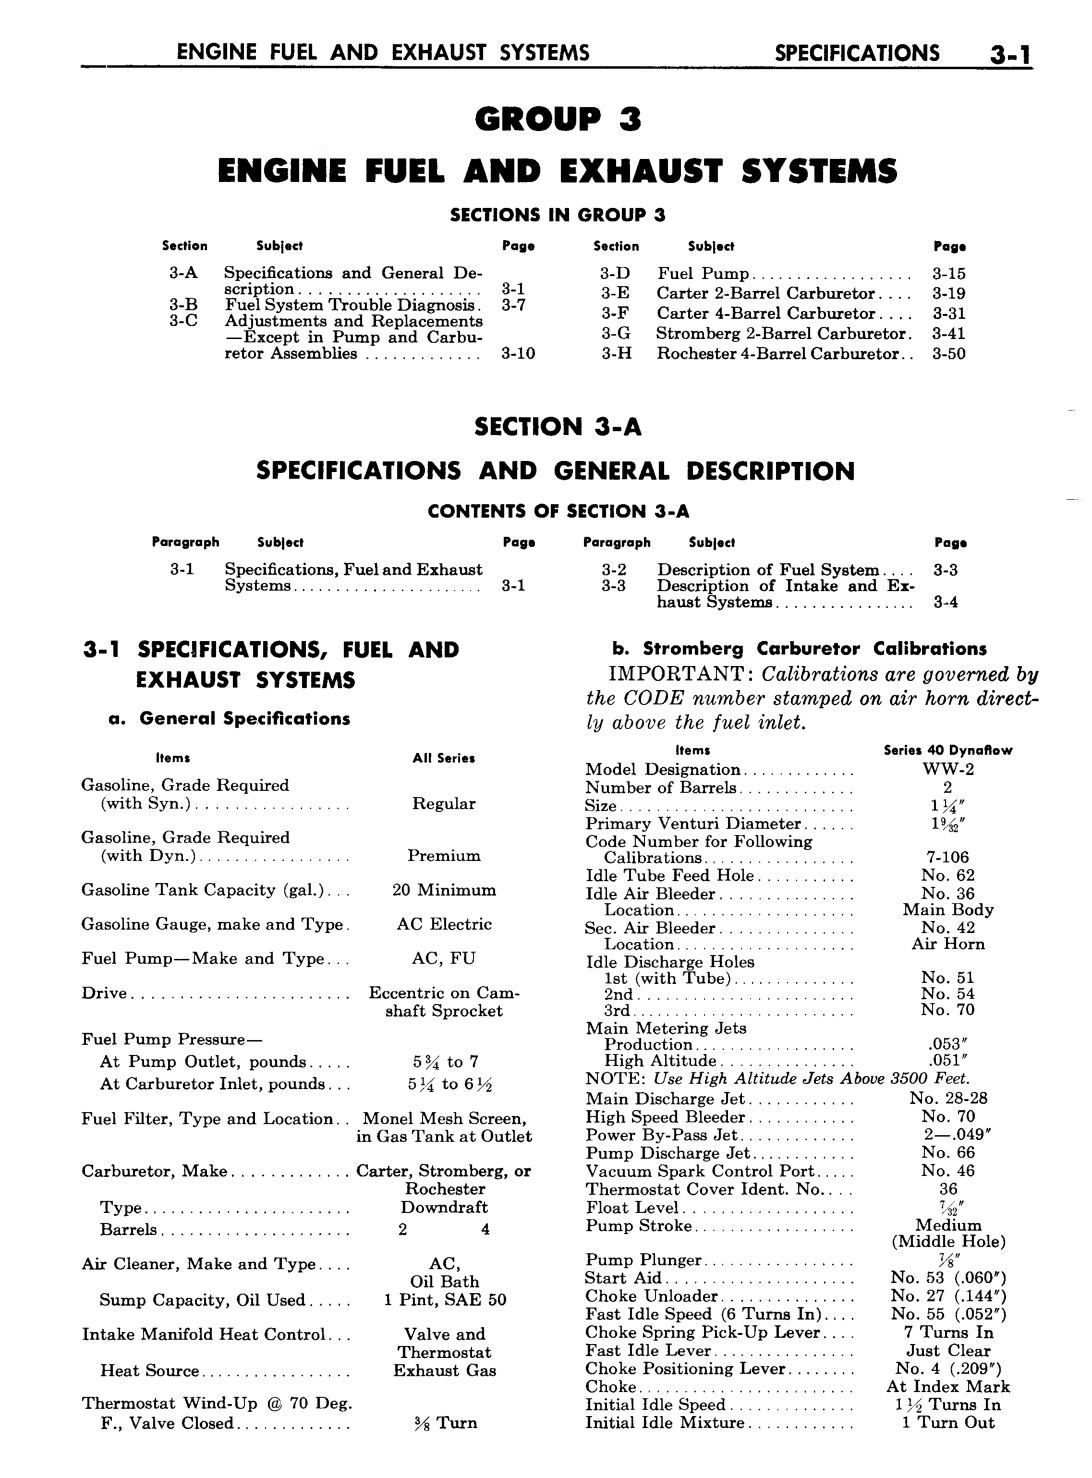 n_04 1957 Buick Shop Manual - Engine Fuel & Exhaust-001-001.jpg